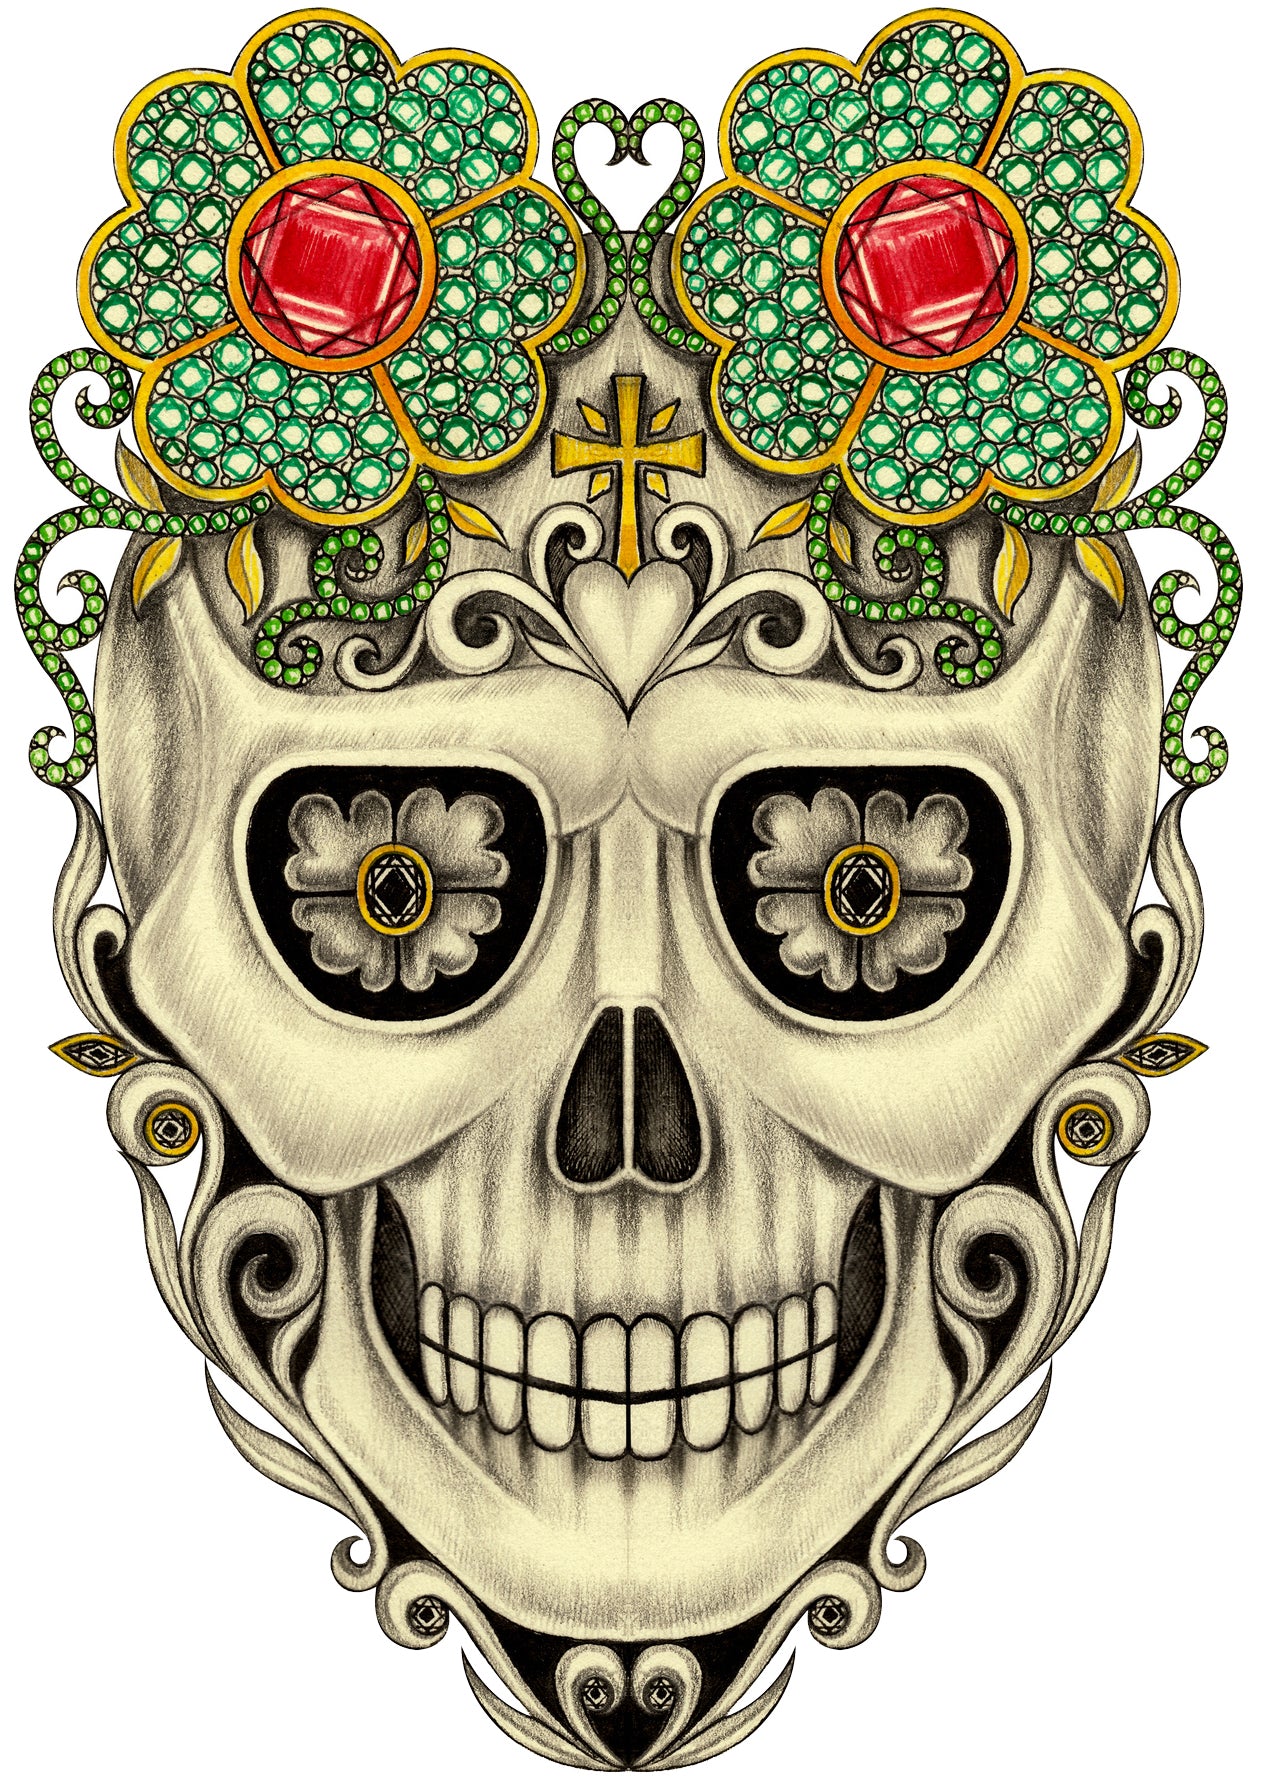 Pencil Sketch Dia de los Muertos Jeweled Flower Skull #2 Vinyl Decal Sticker